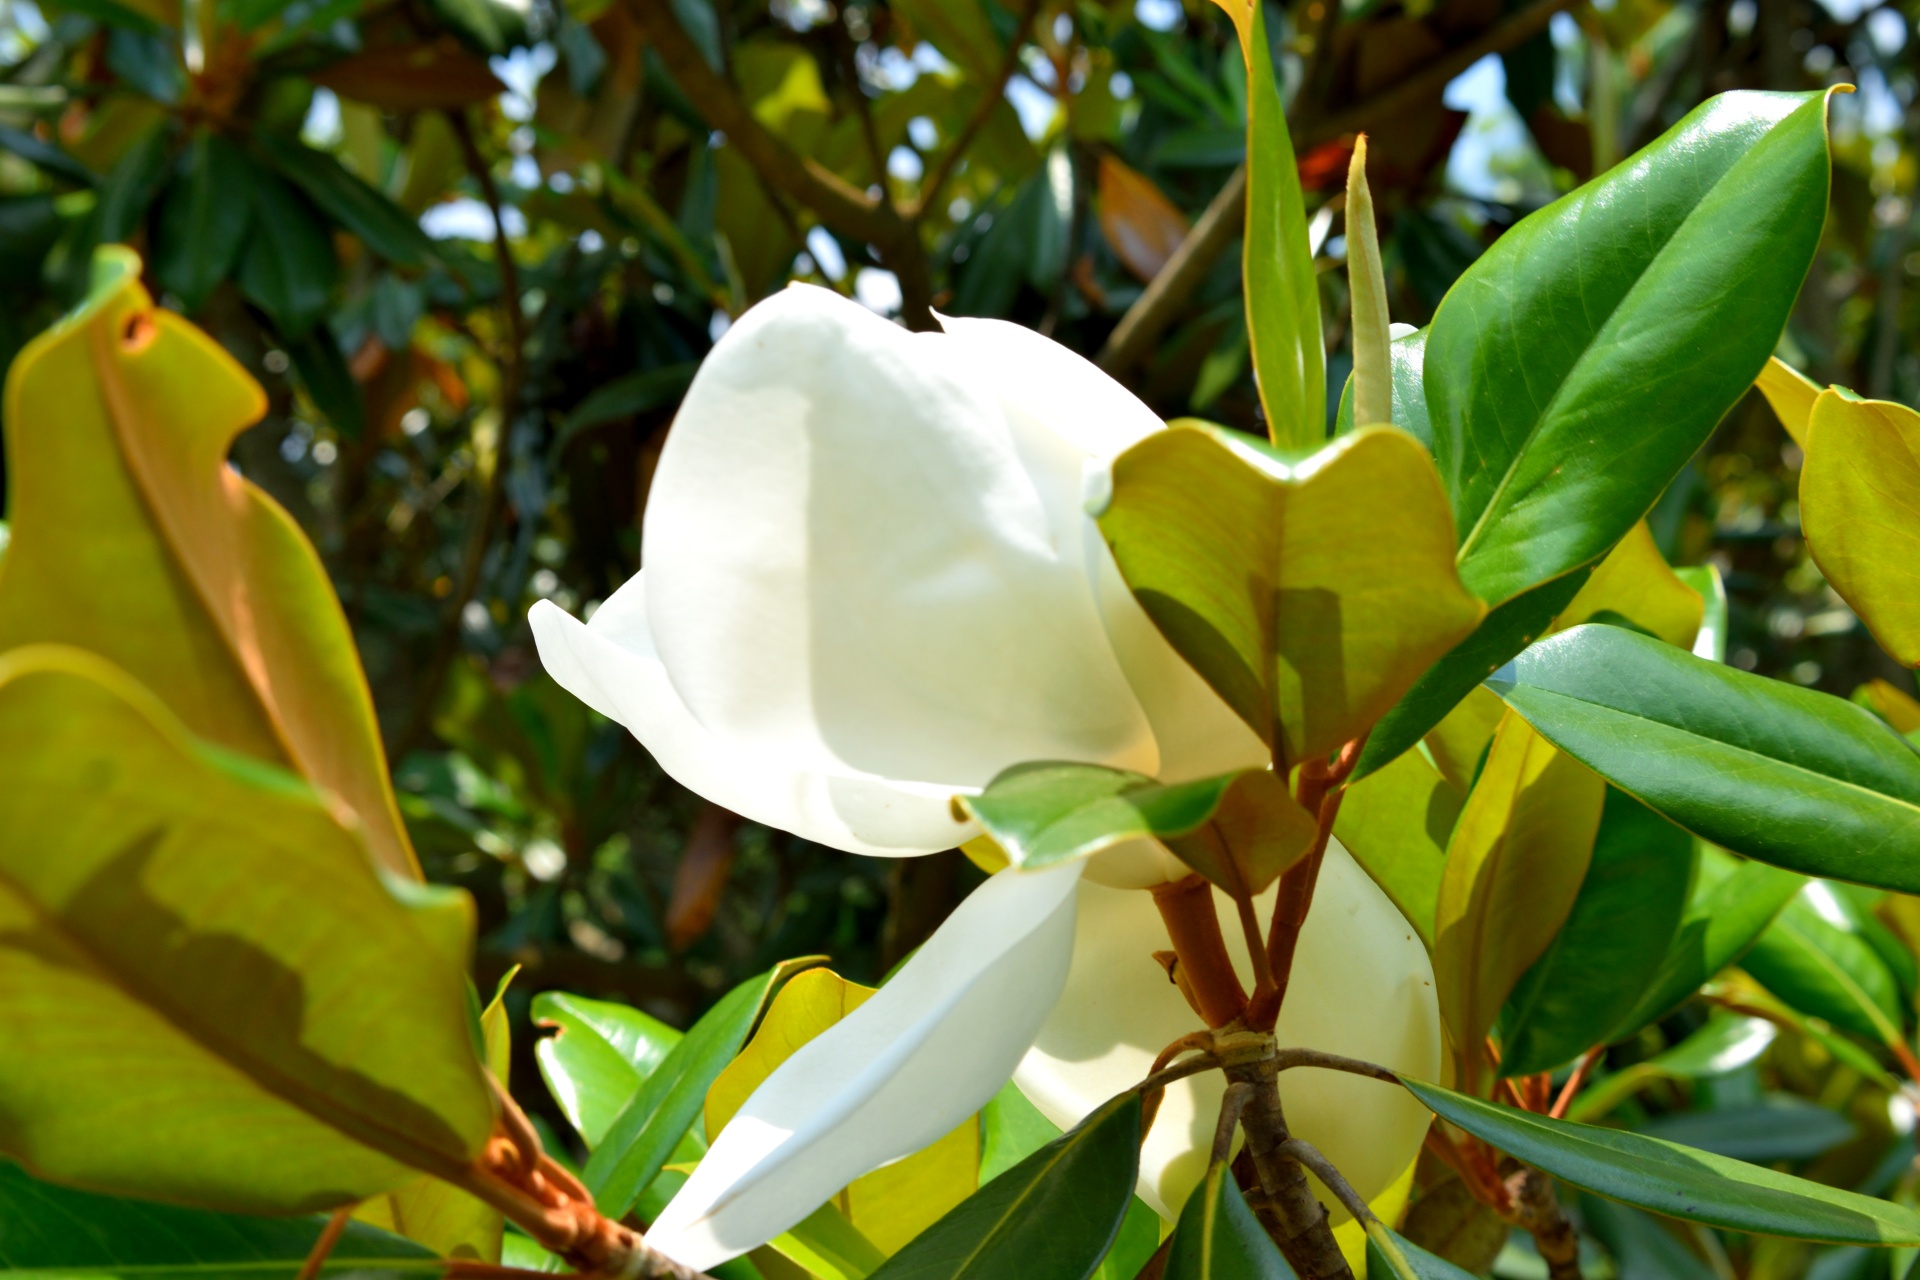 Large white Magnolia tree flower starting to bloom.